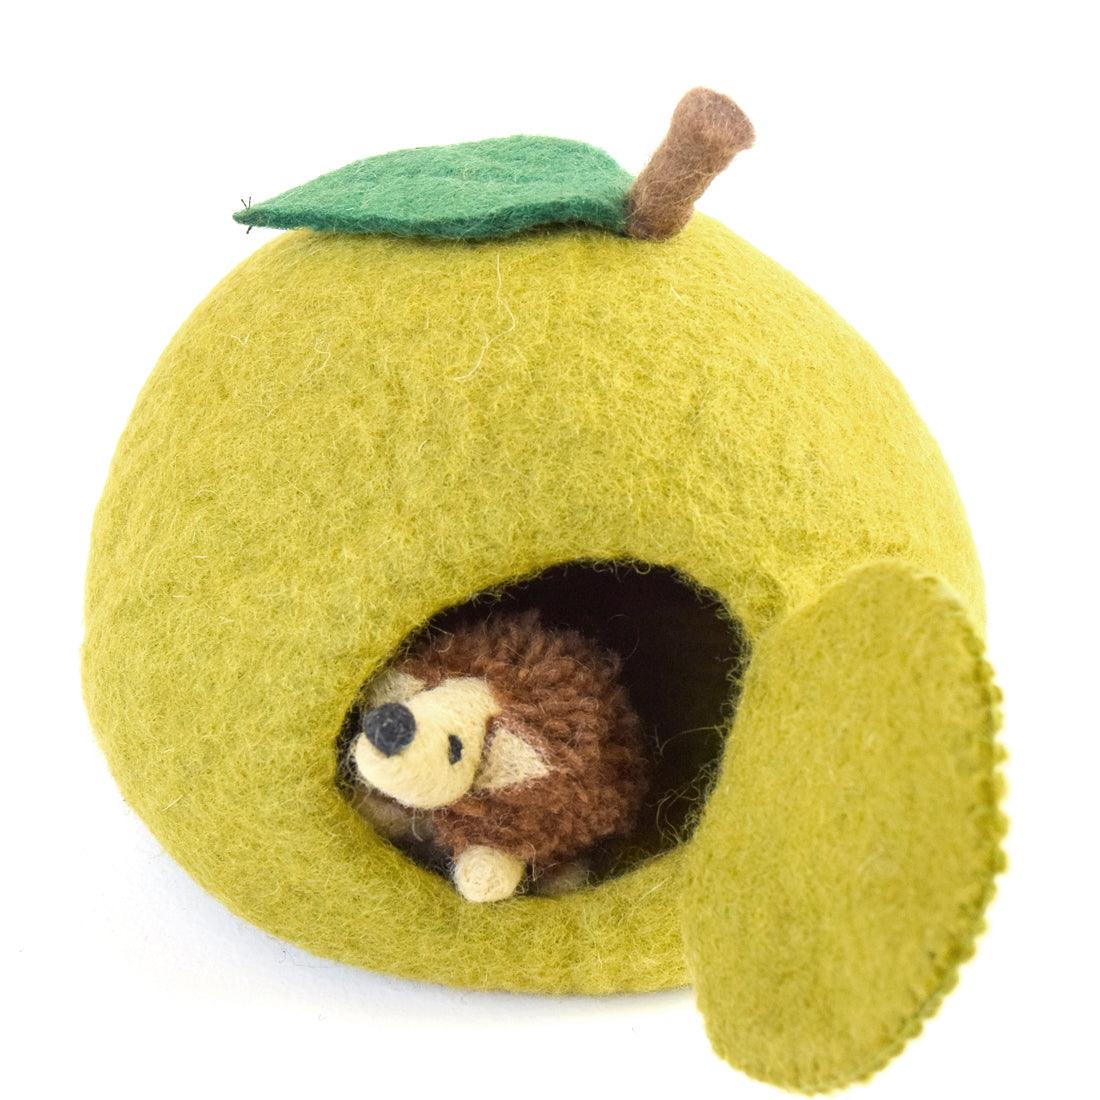 Felt Green Apple House with Hedgehog Toy - Tara Treasures